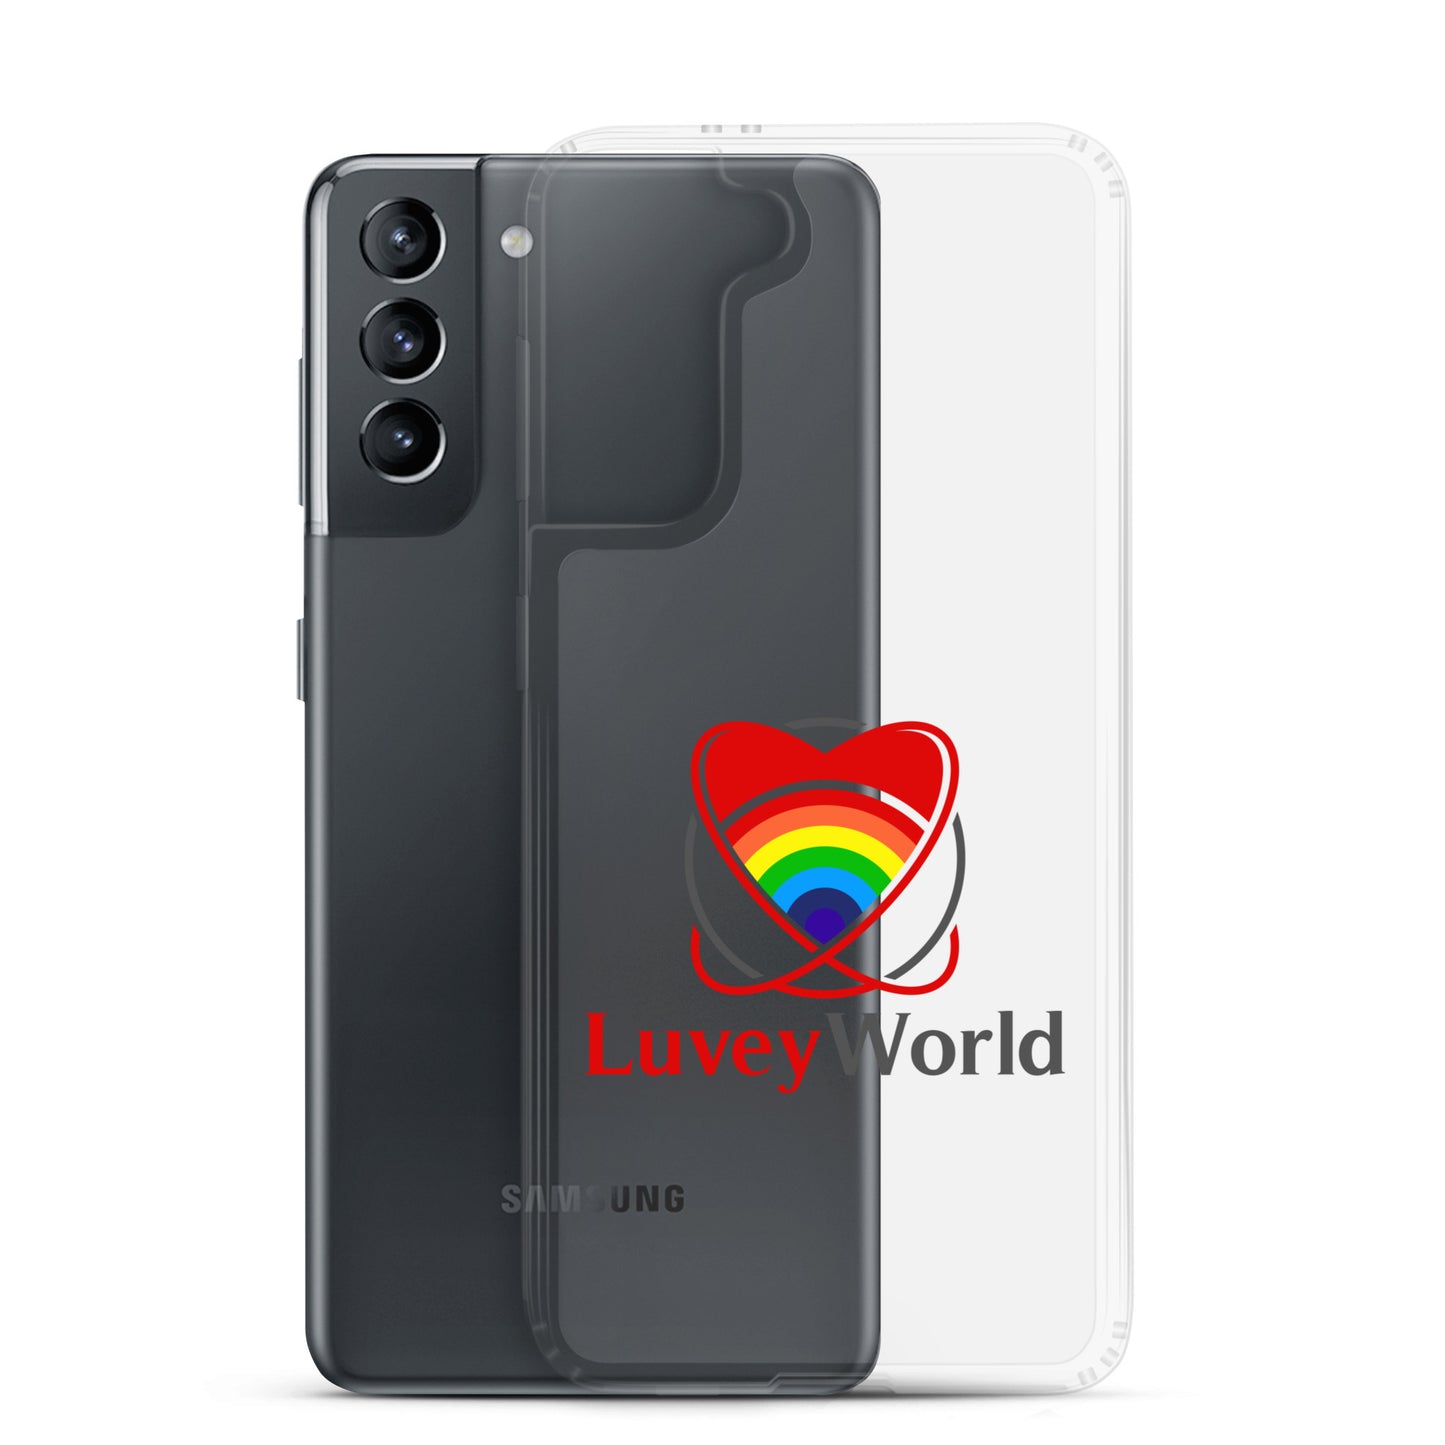 LuveyWorld Samsung Case